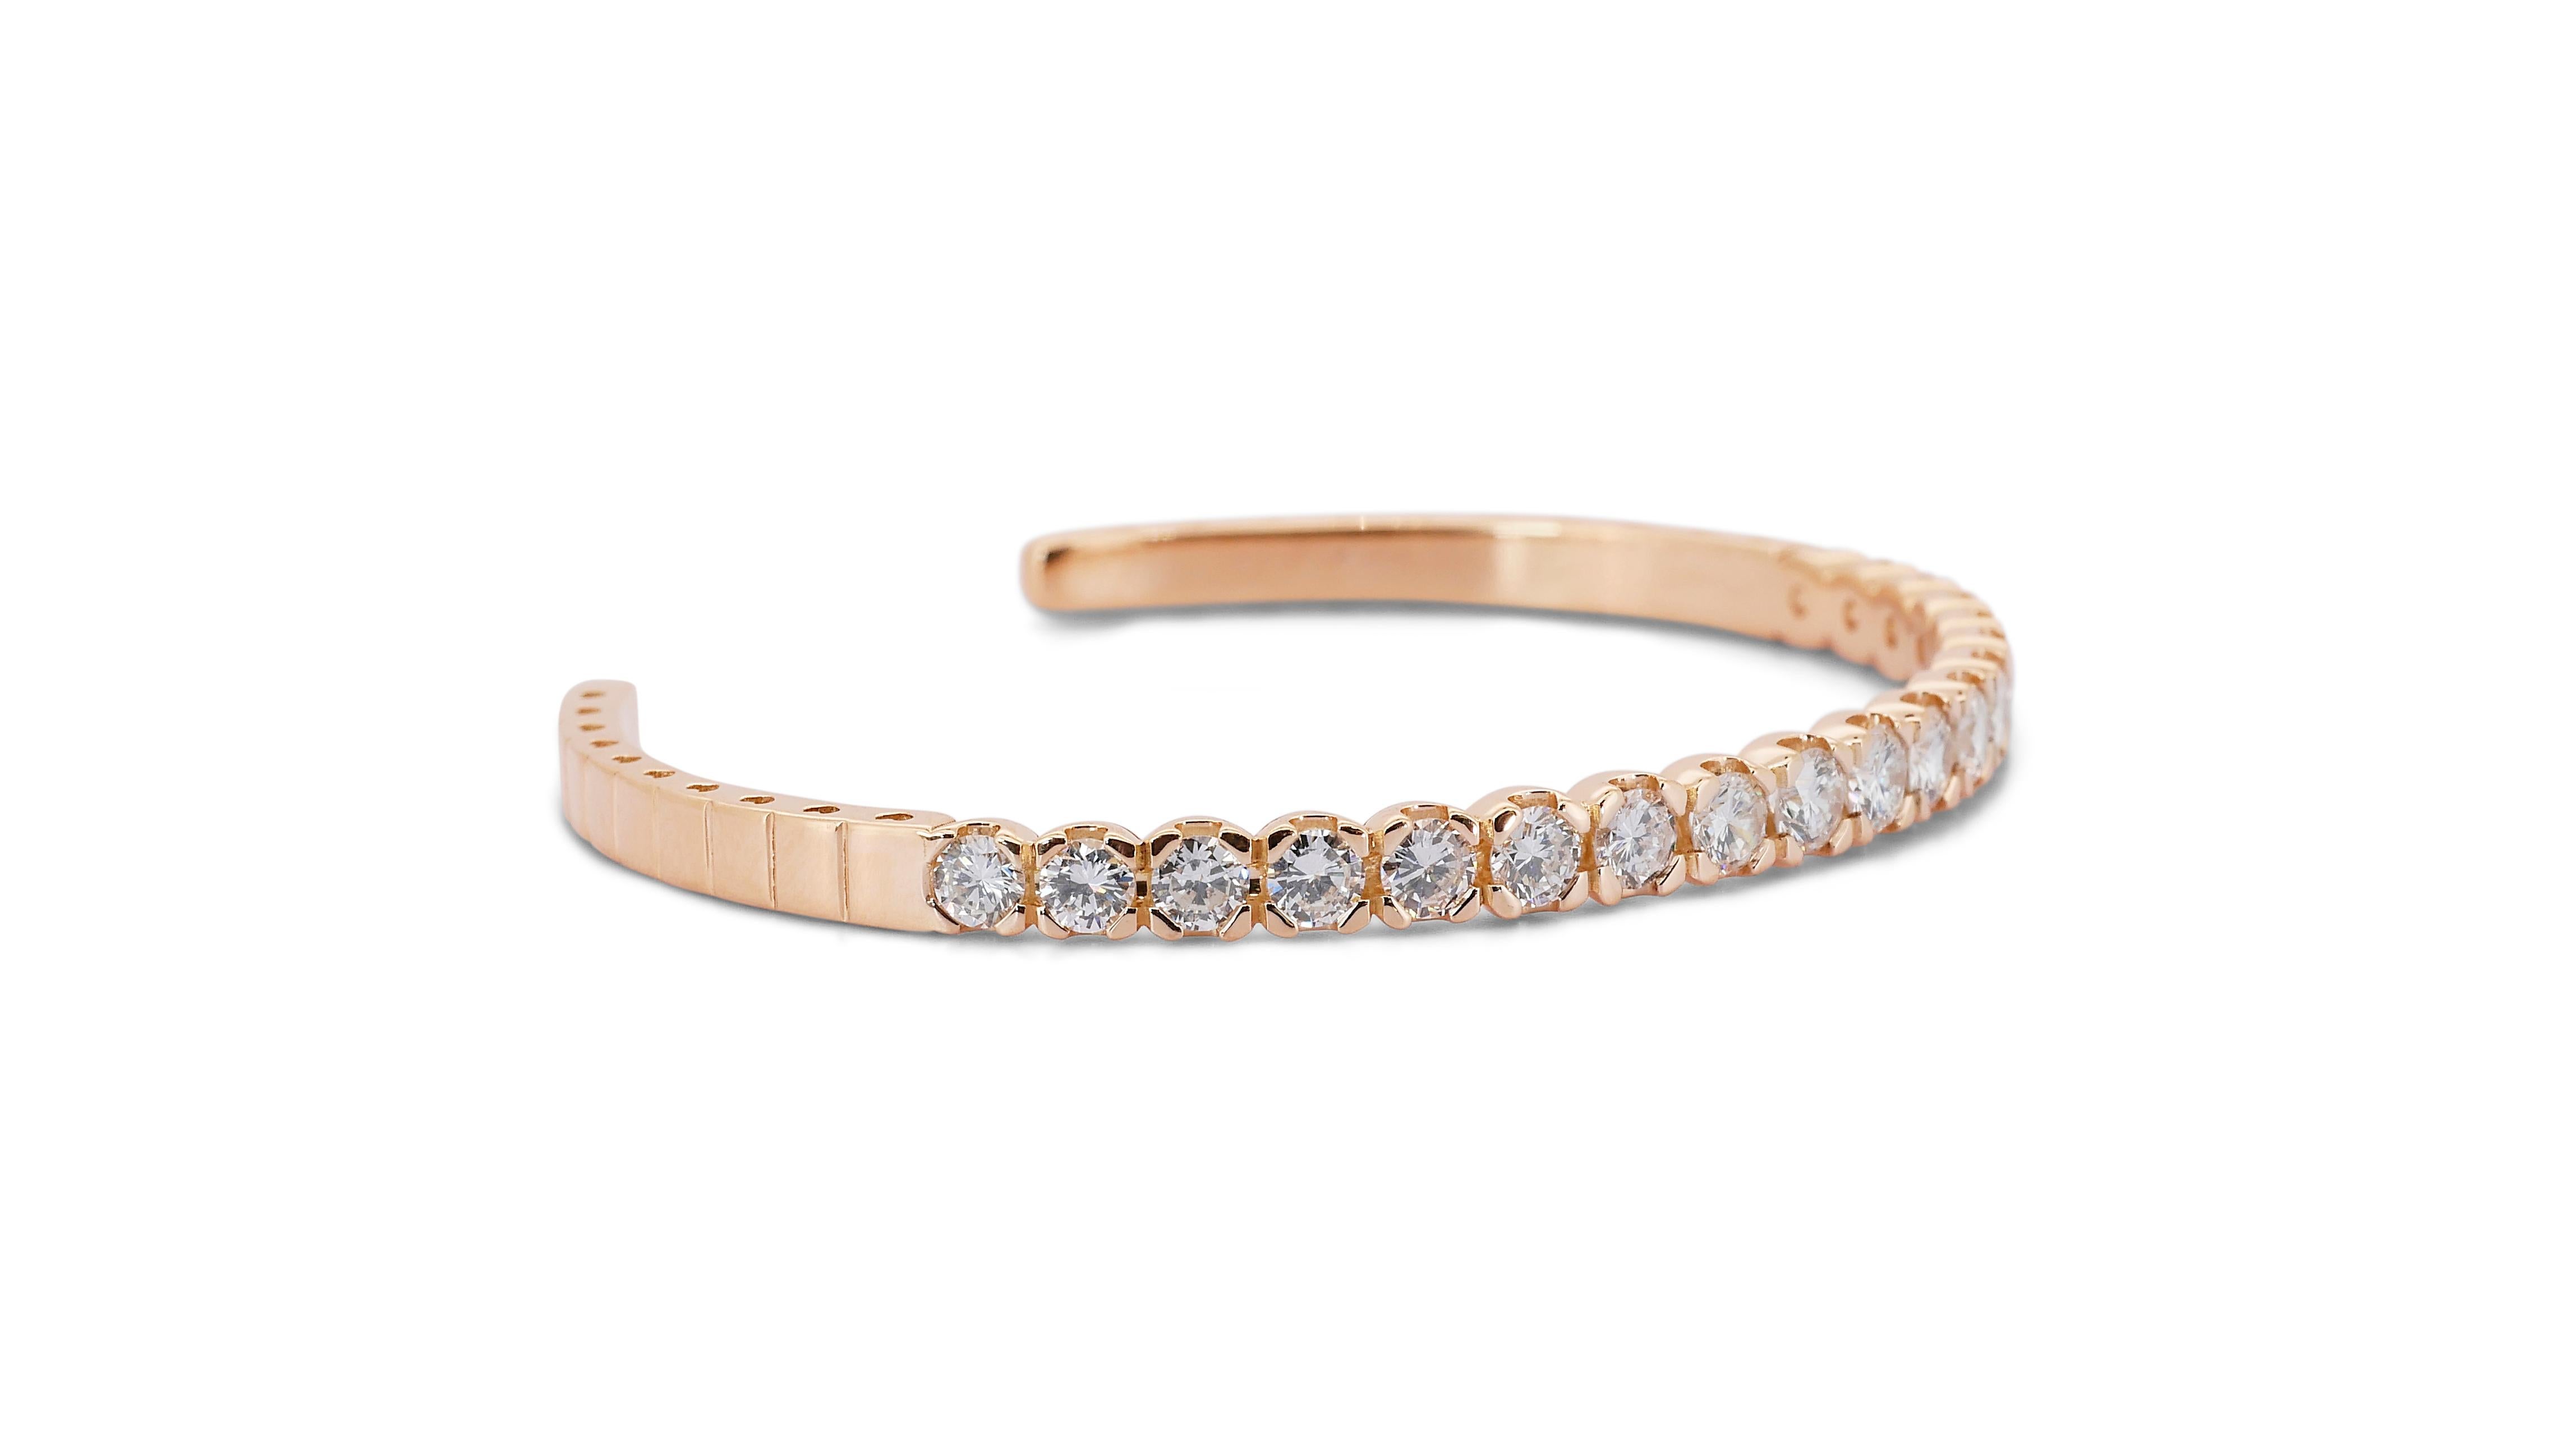 Women's Exquisite 18kt. Yellow Gold Bracelet w/ 4.30 ct Total Natural Diamonds IGI Cert For Sale